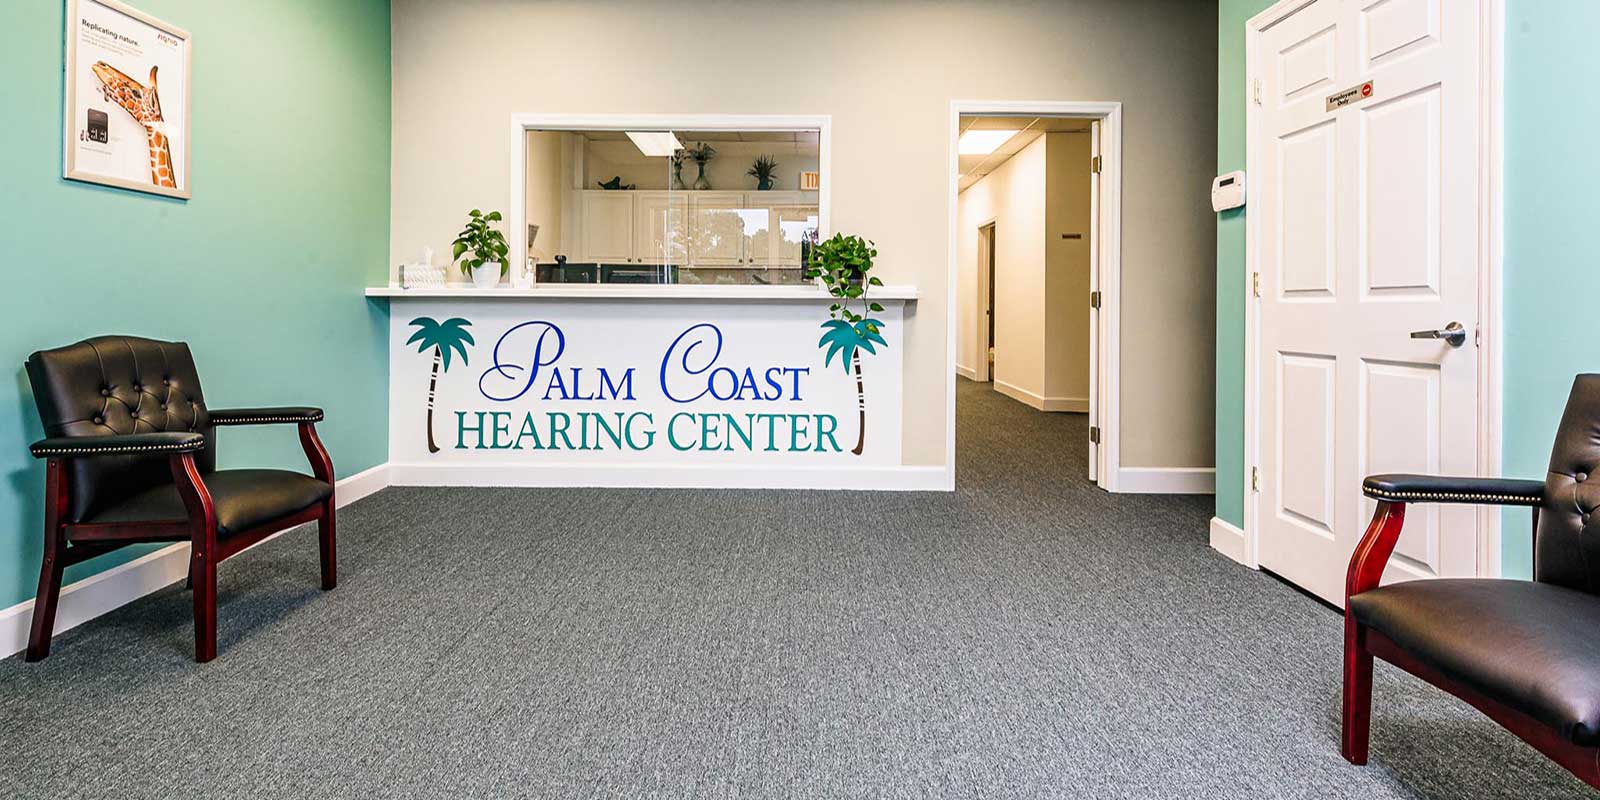 Palm Coast Hearing Center waiting room